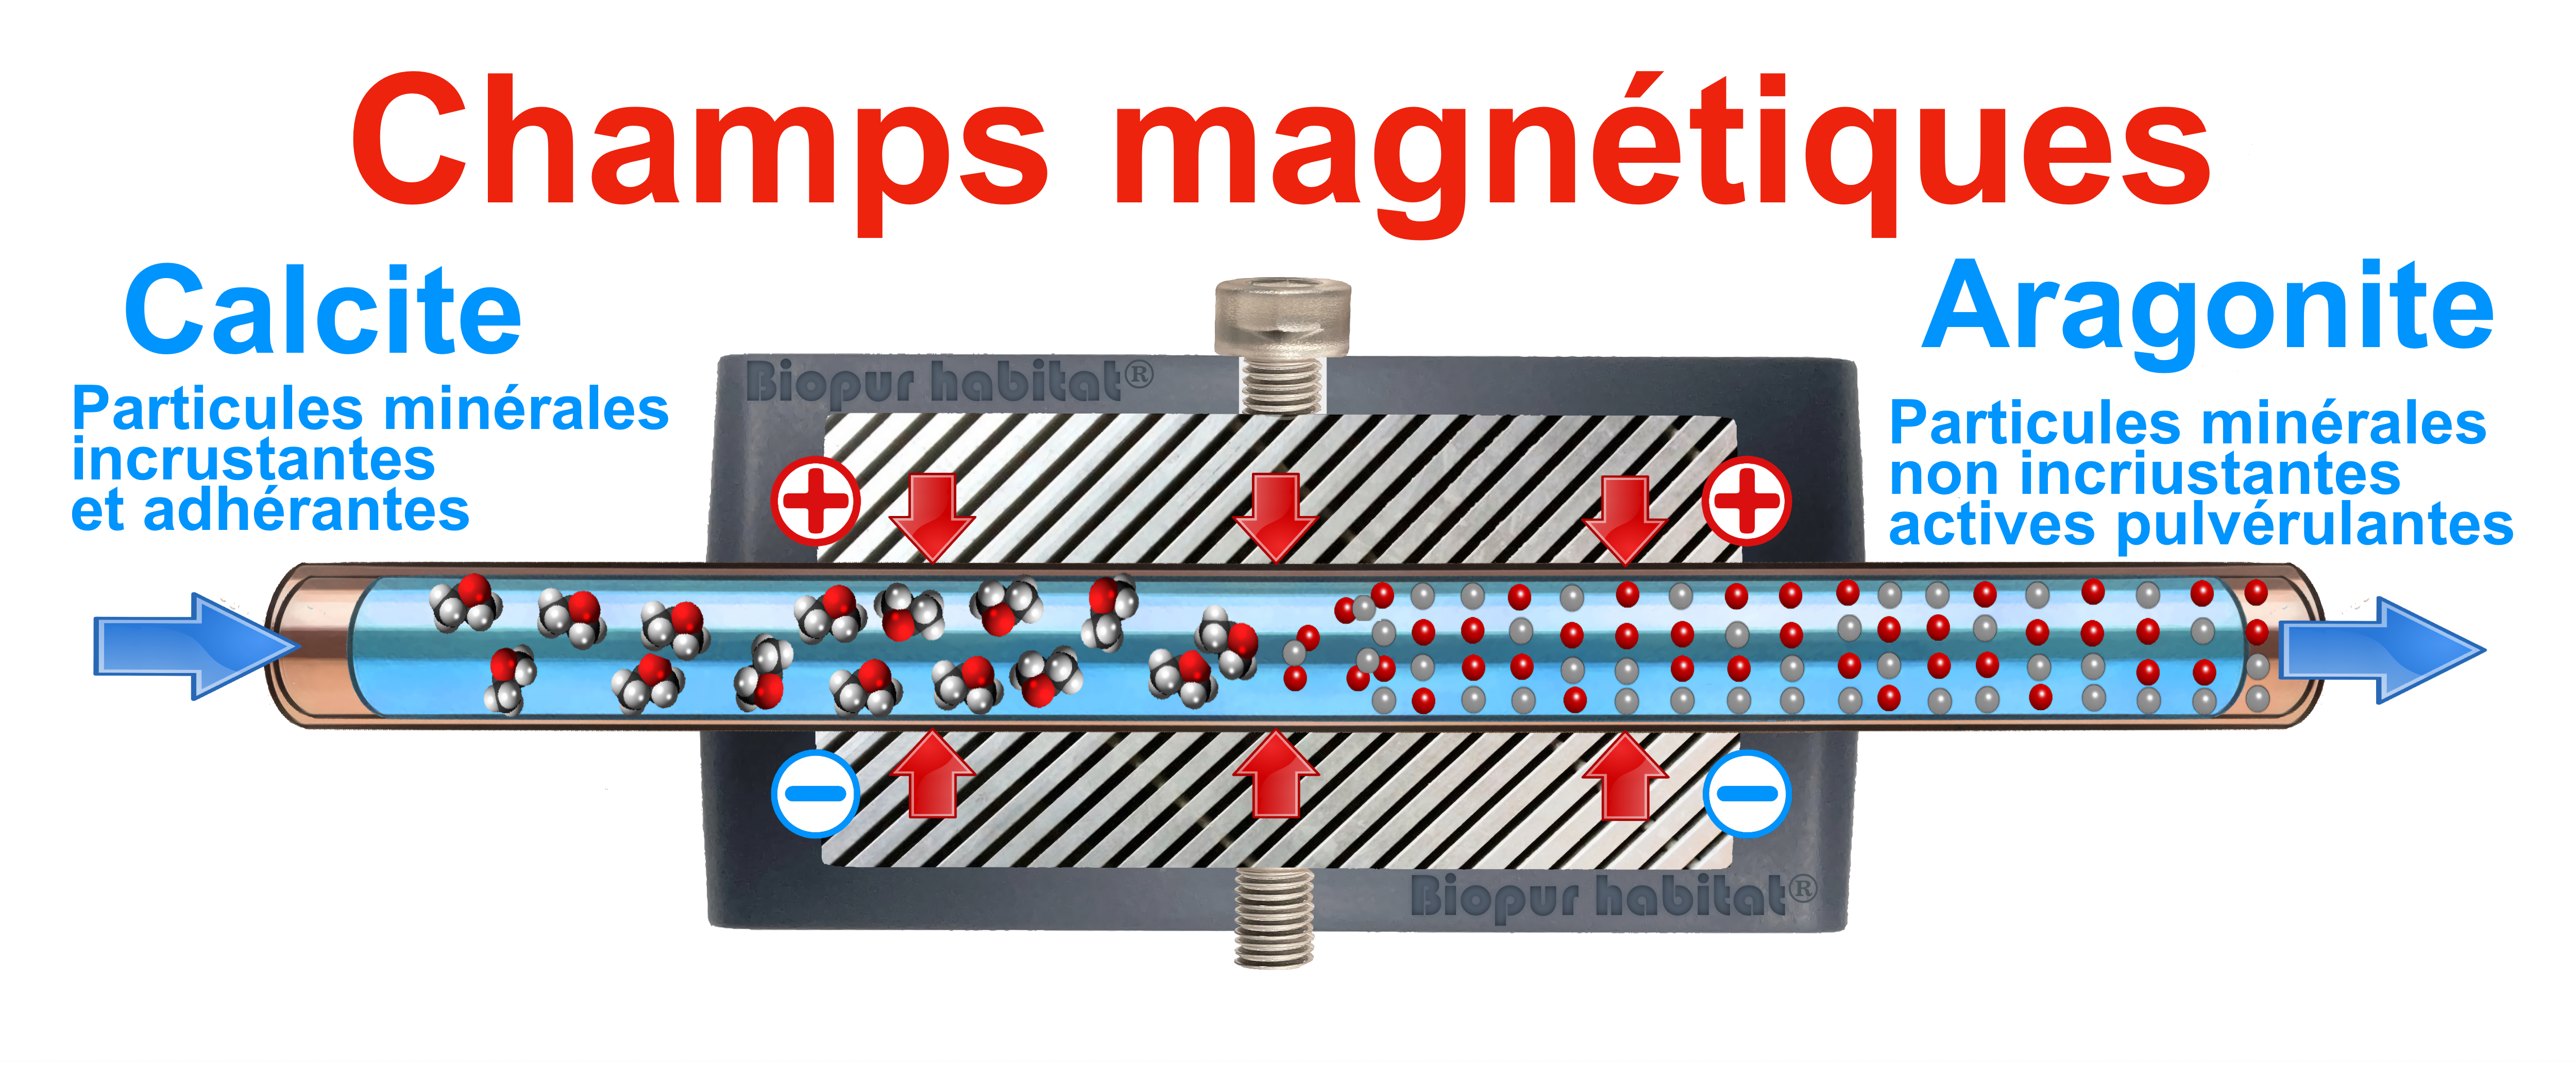 anti calcaire magnétique powermag Mi Power 10800 gauss